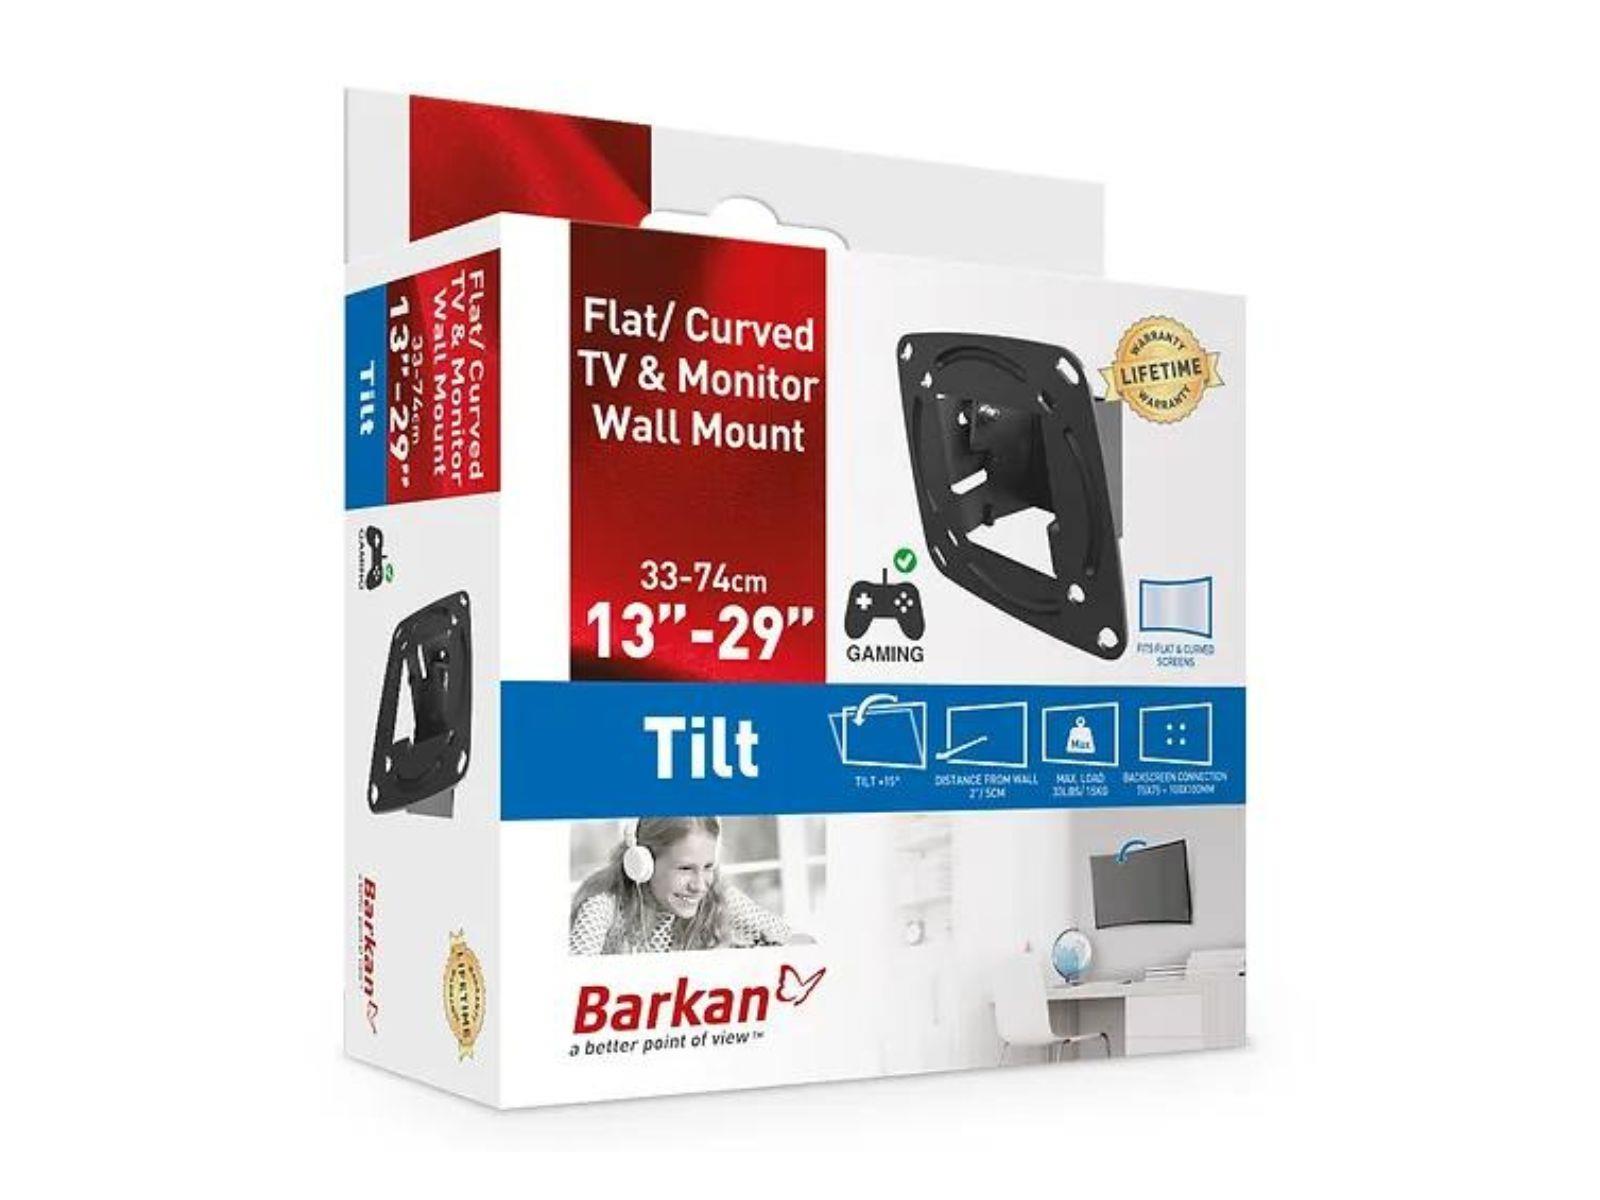 Tilt TV Mounting Bracket Fits Sizes 15-26" TVs  in its box